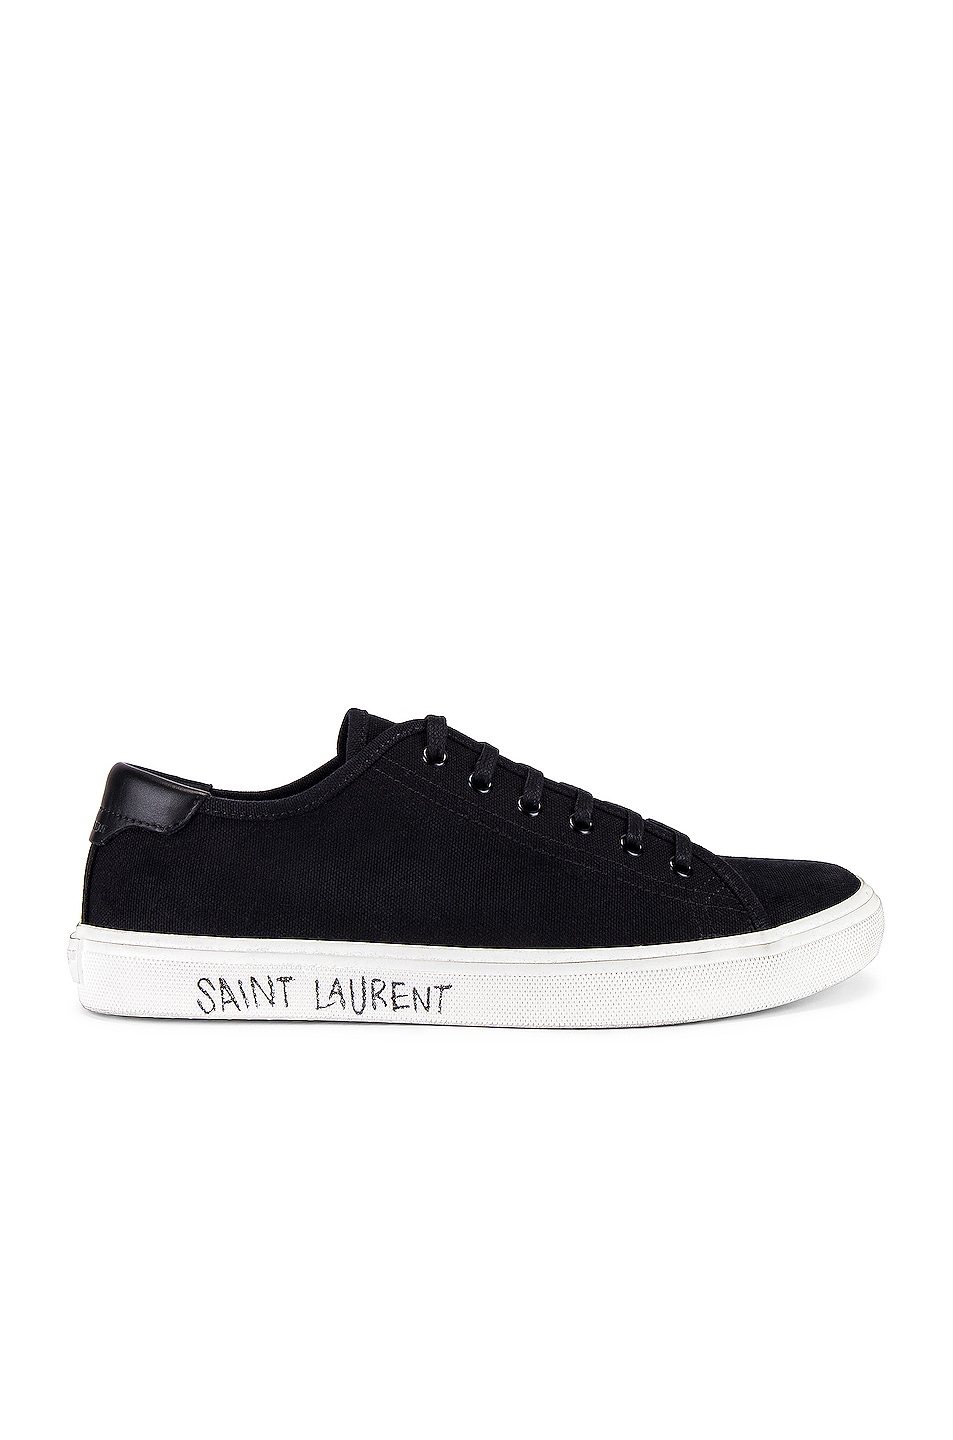 Image 1 of Saint Laurent Malibu Low Top Sneaker in Black & Black